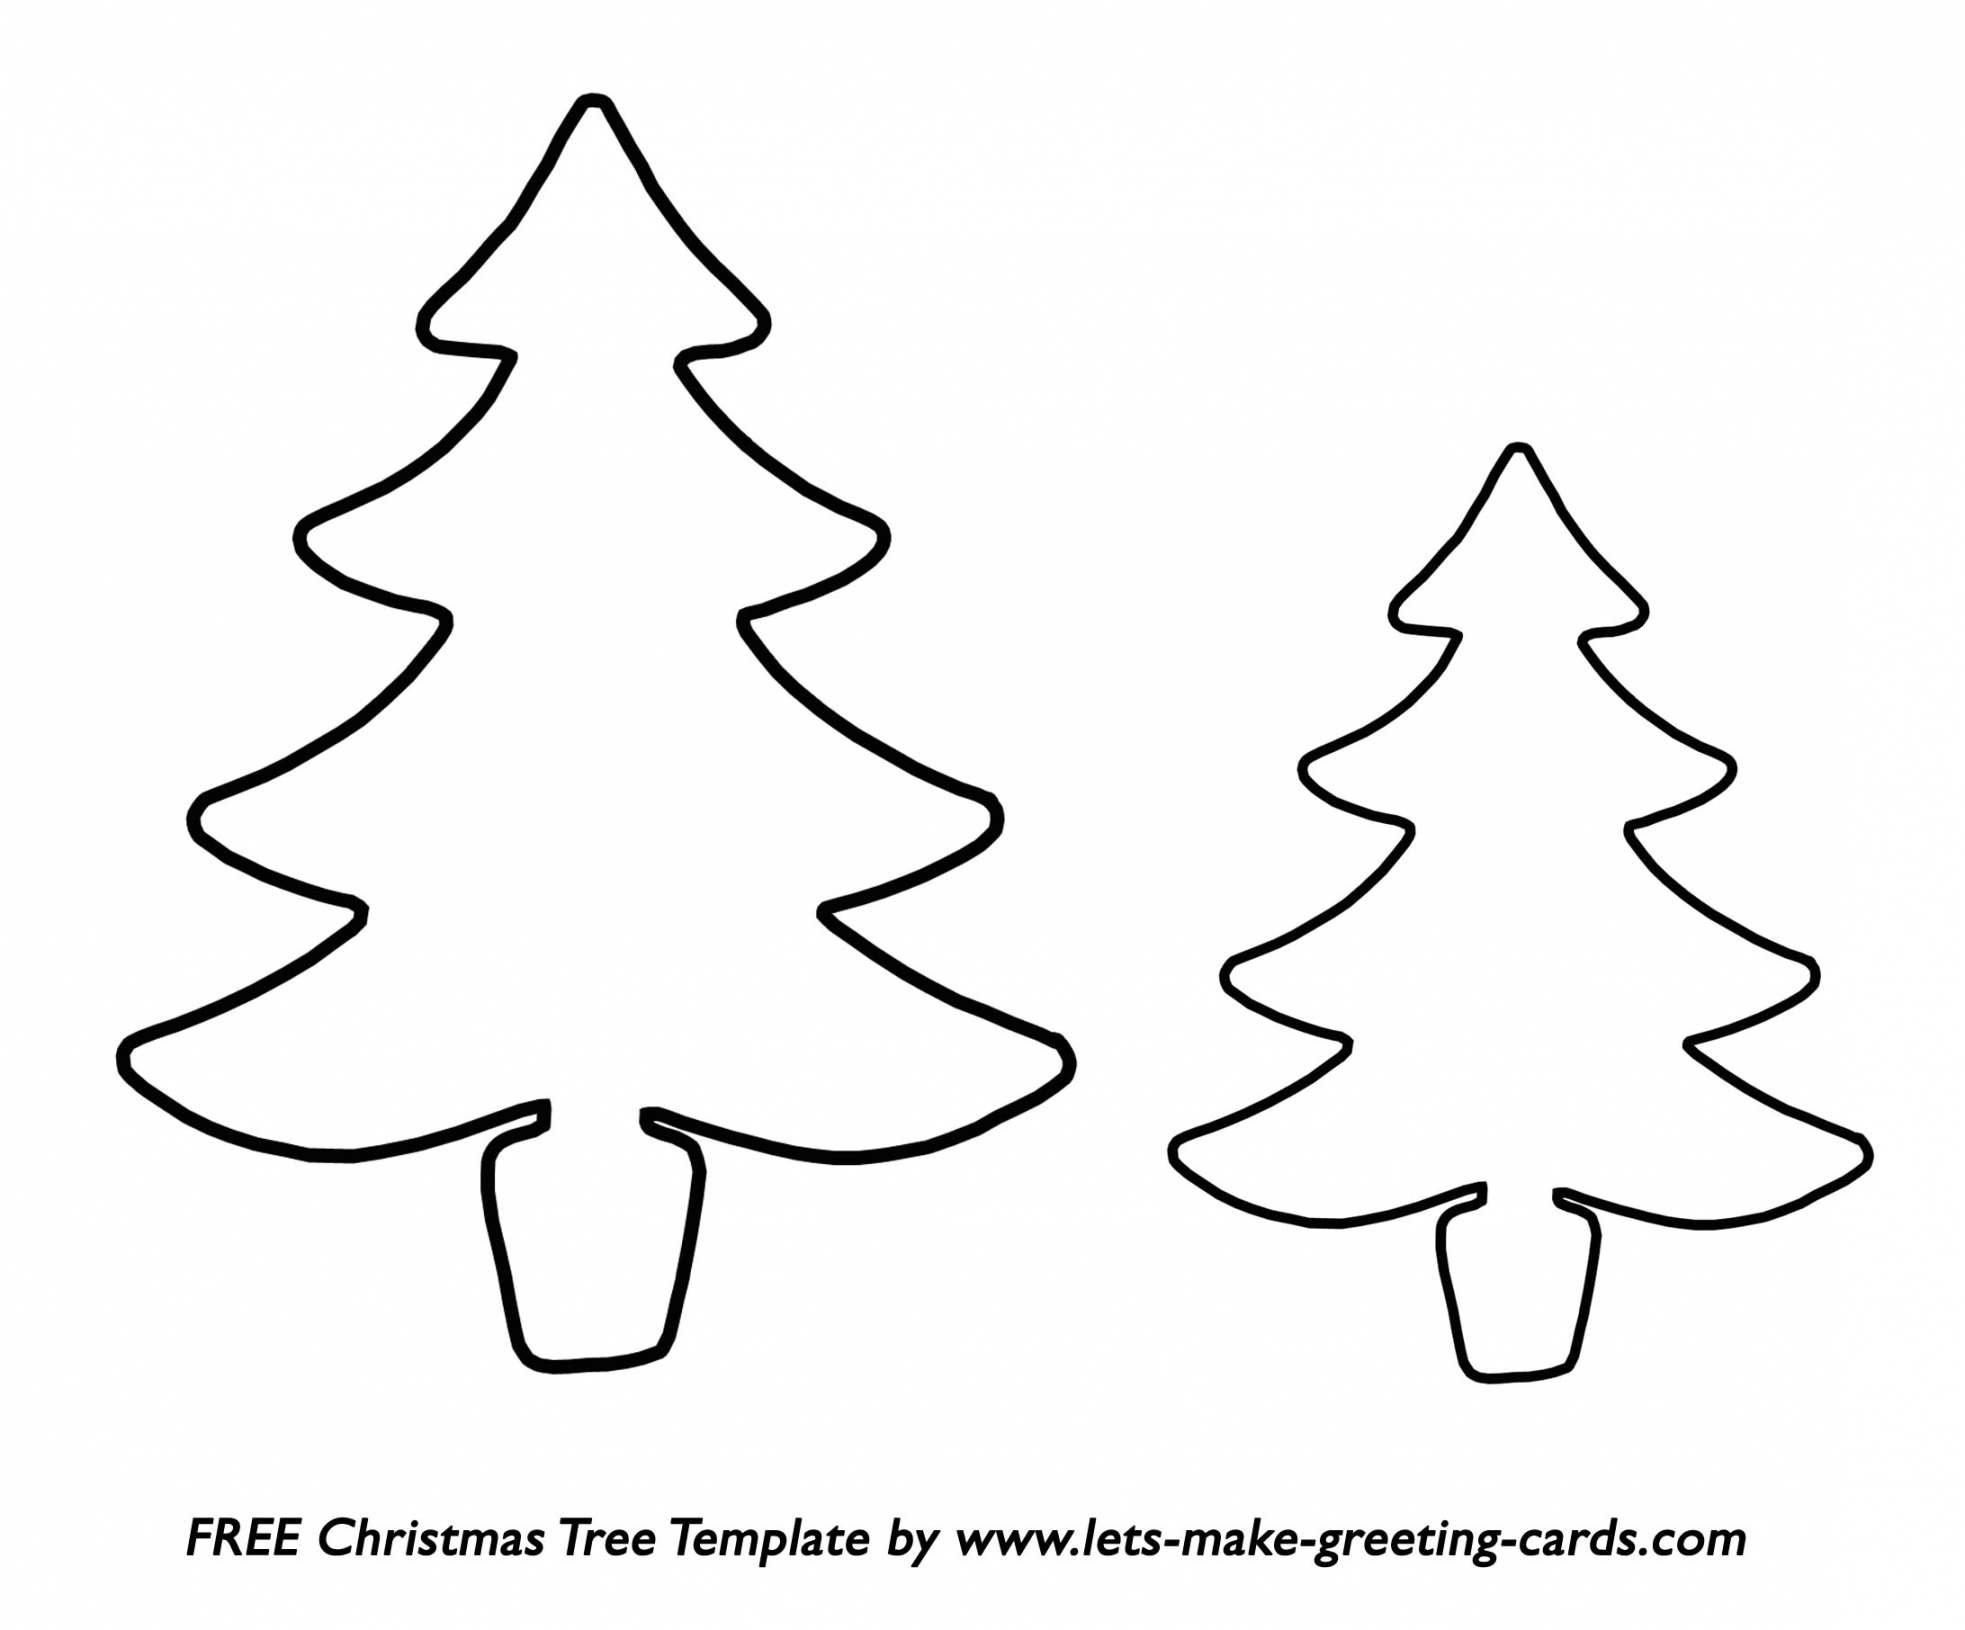 Free Christmas Tree Templates - FREE Printables - Free Printable Christmas Tree Template